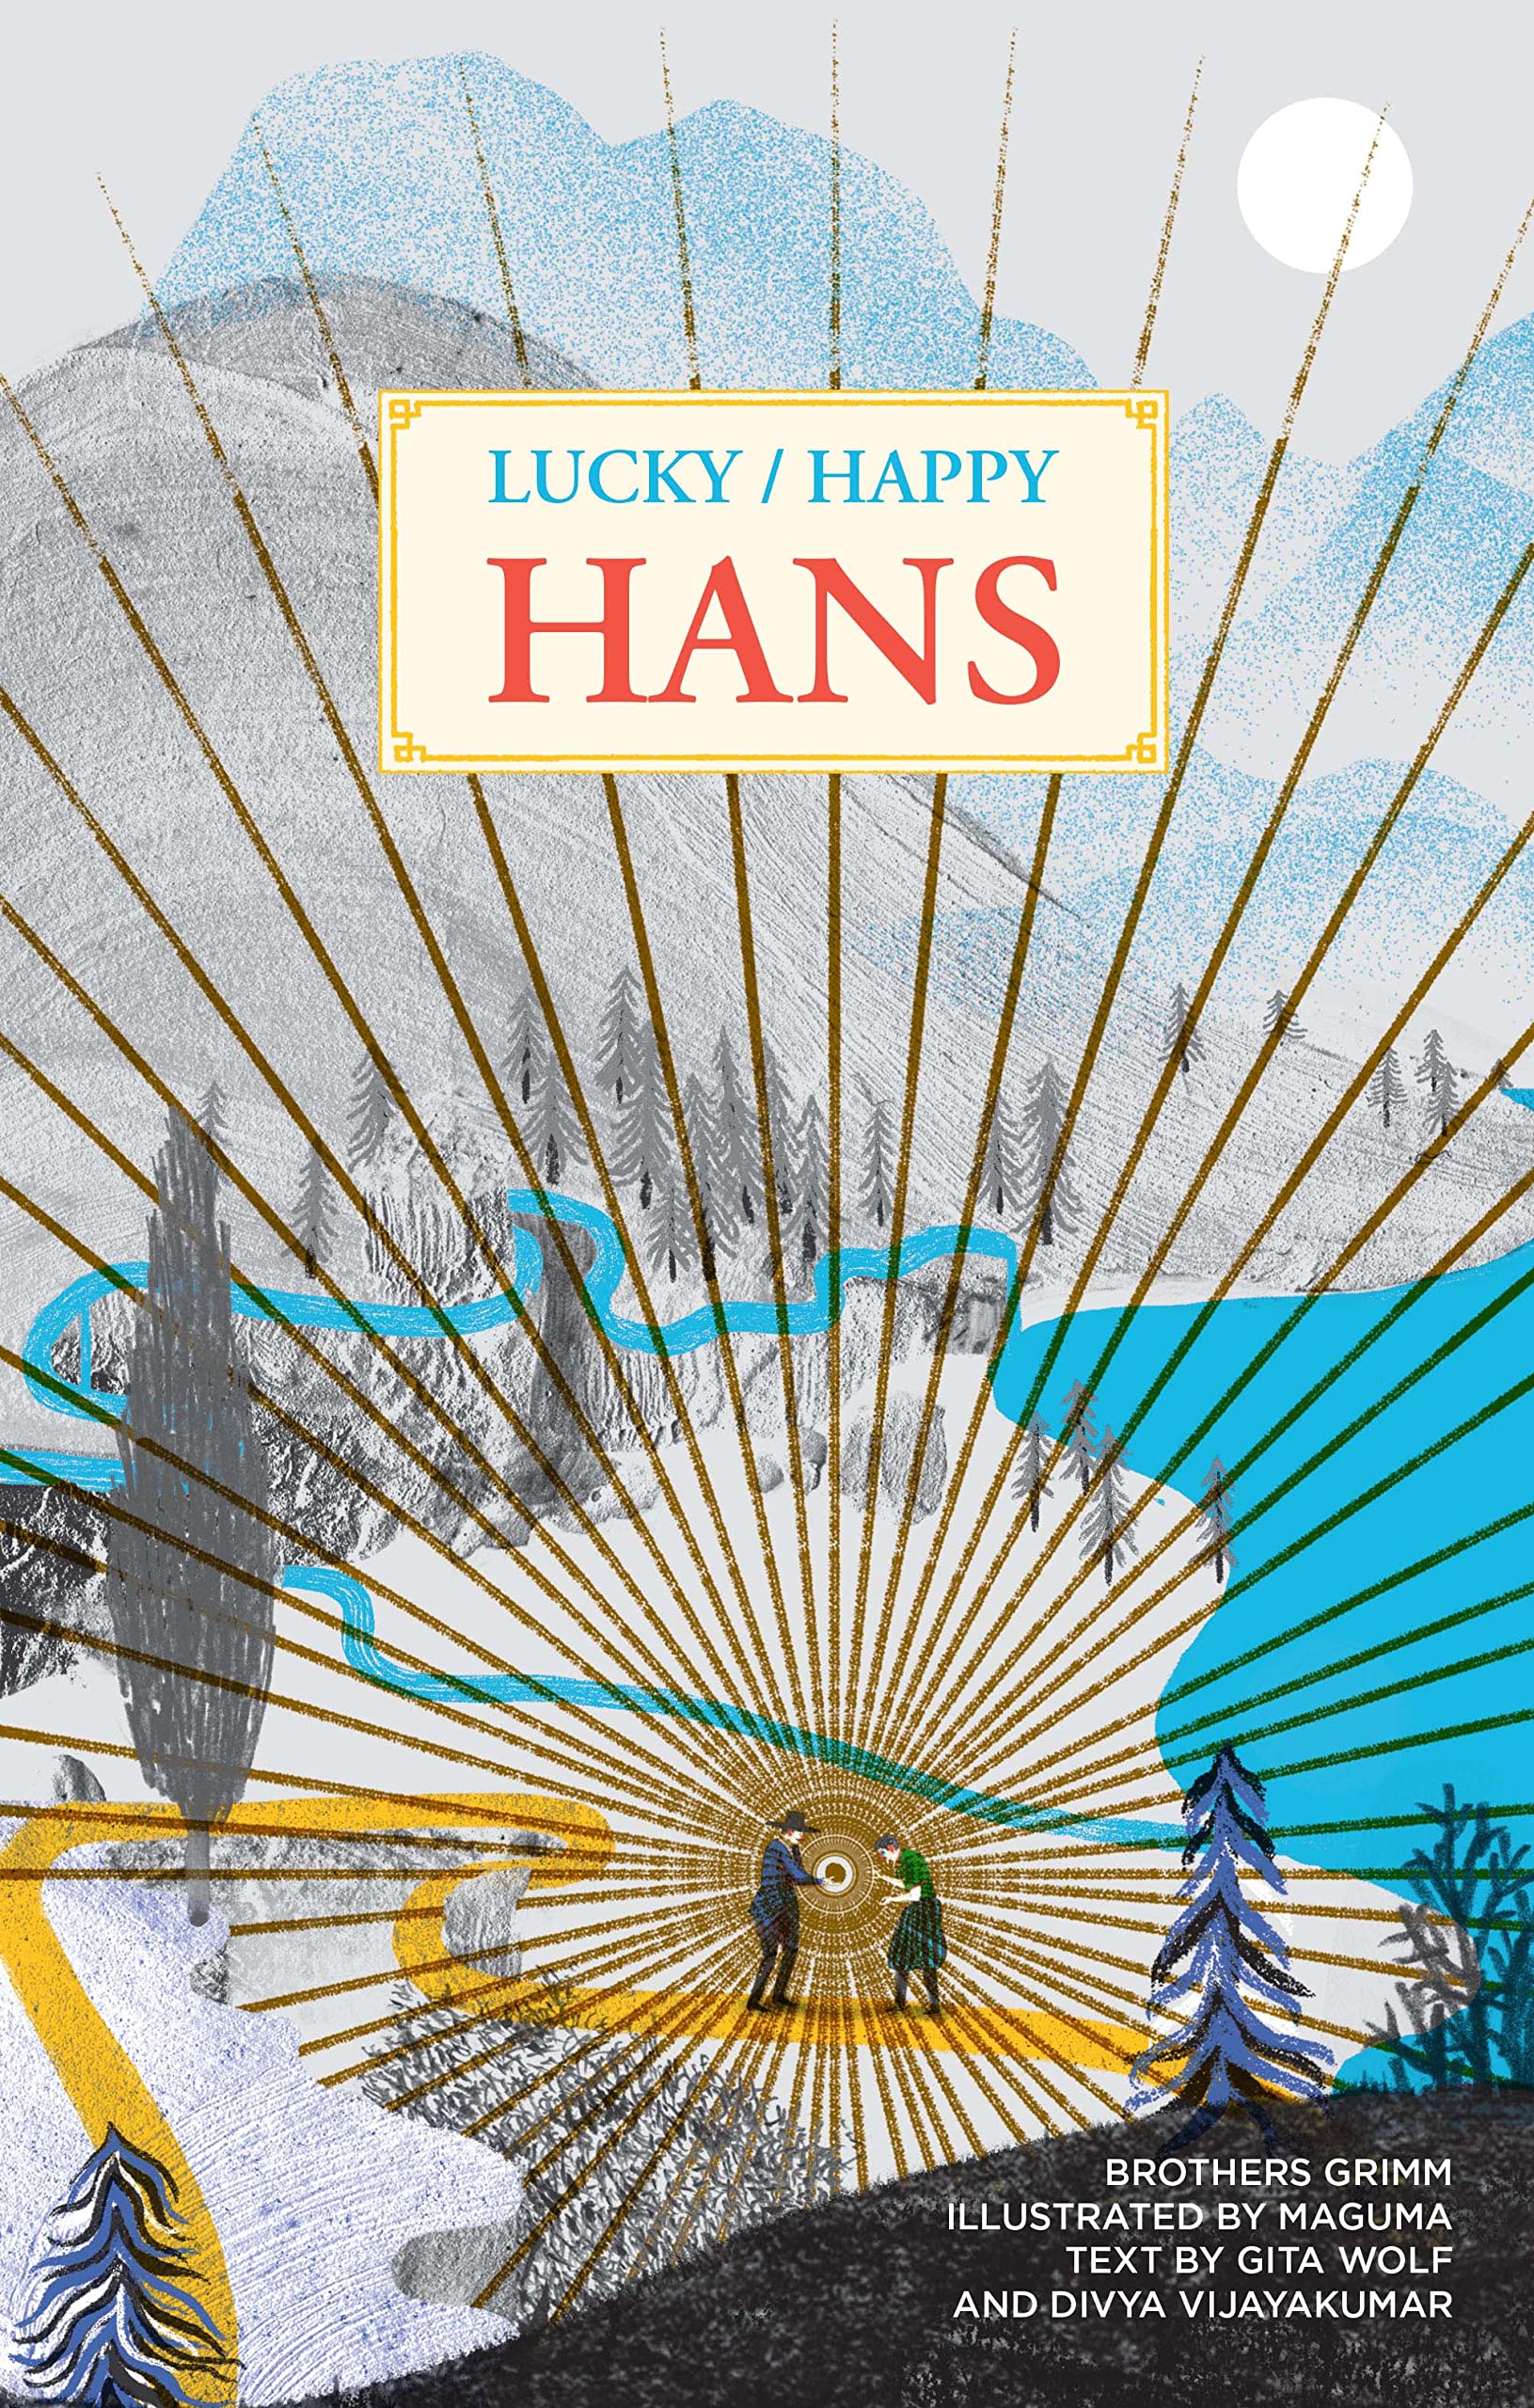 Luckyhappy Hans (Hardcover)